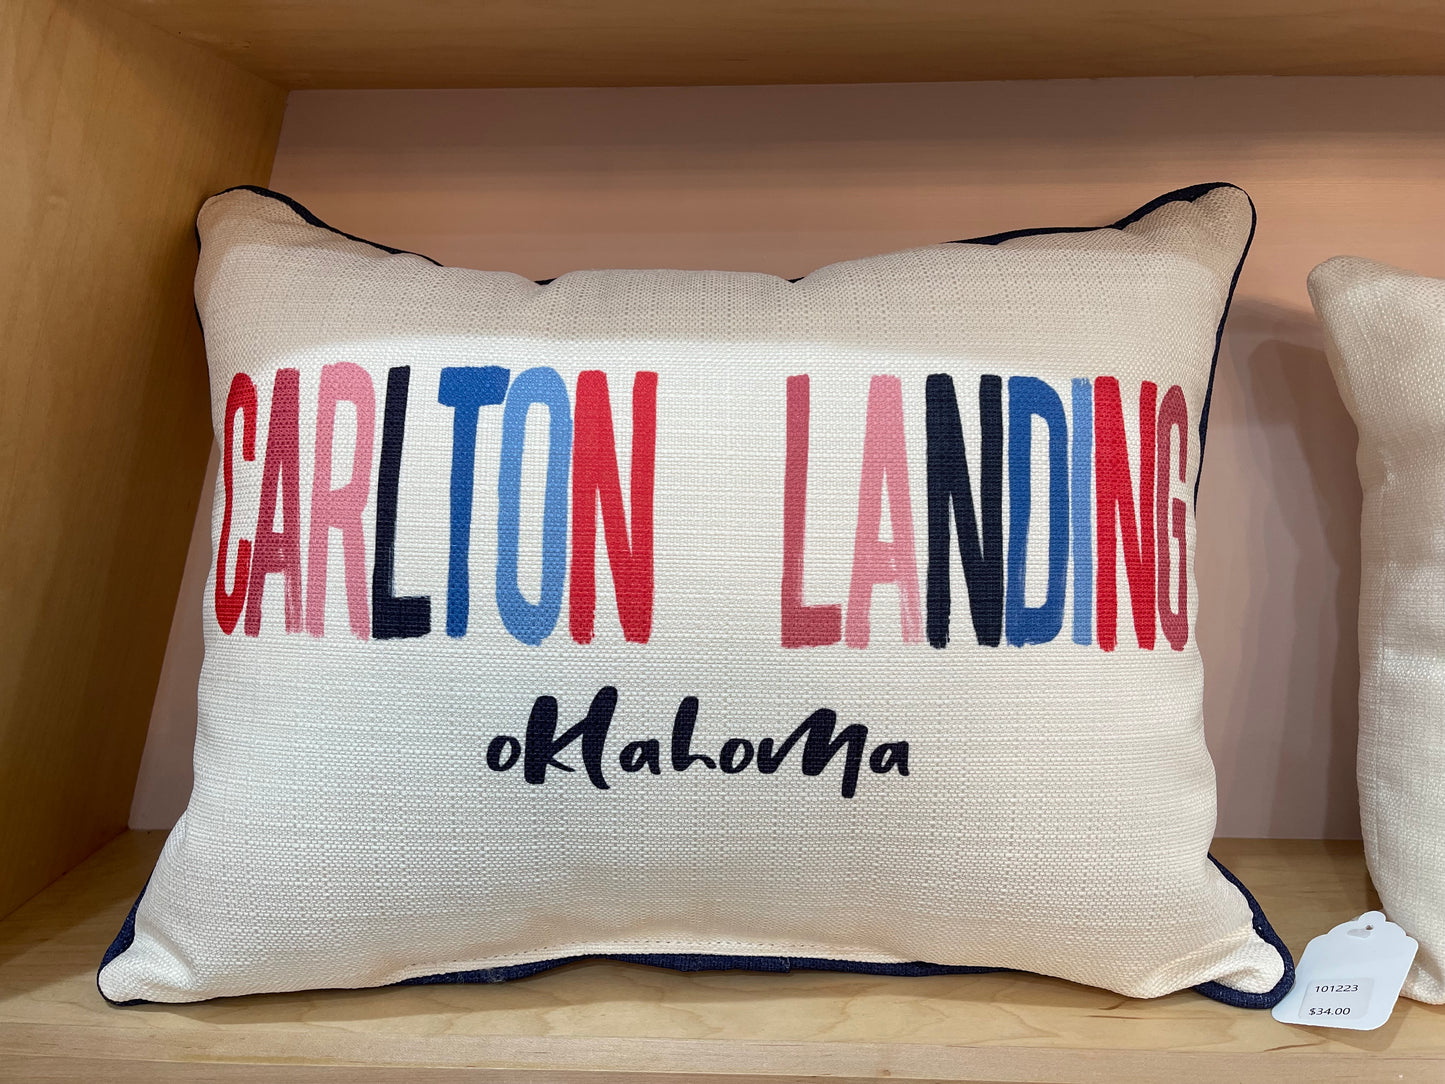 Carlton Landing, Oklahoma Pillow - Pharm Favorites by Economy Pharmacy